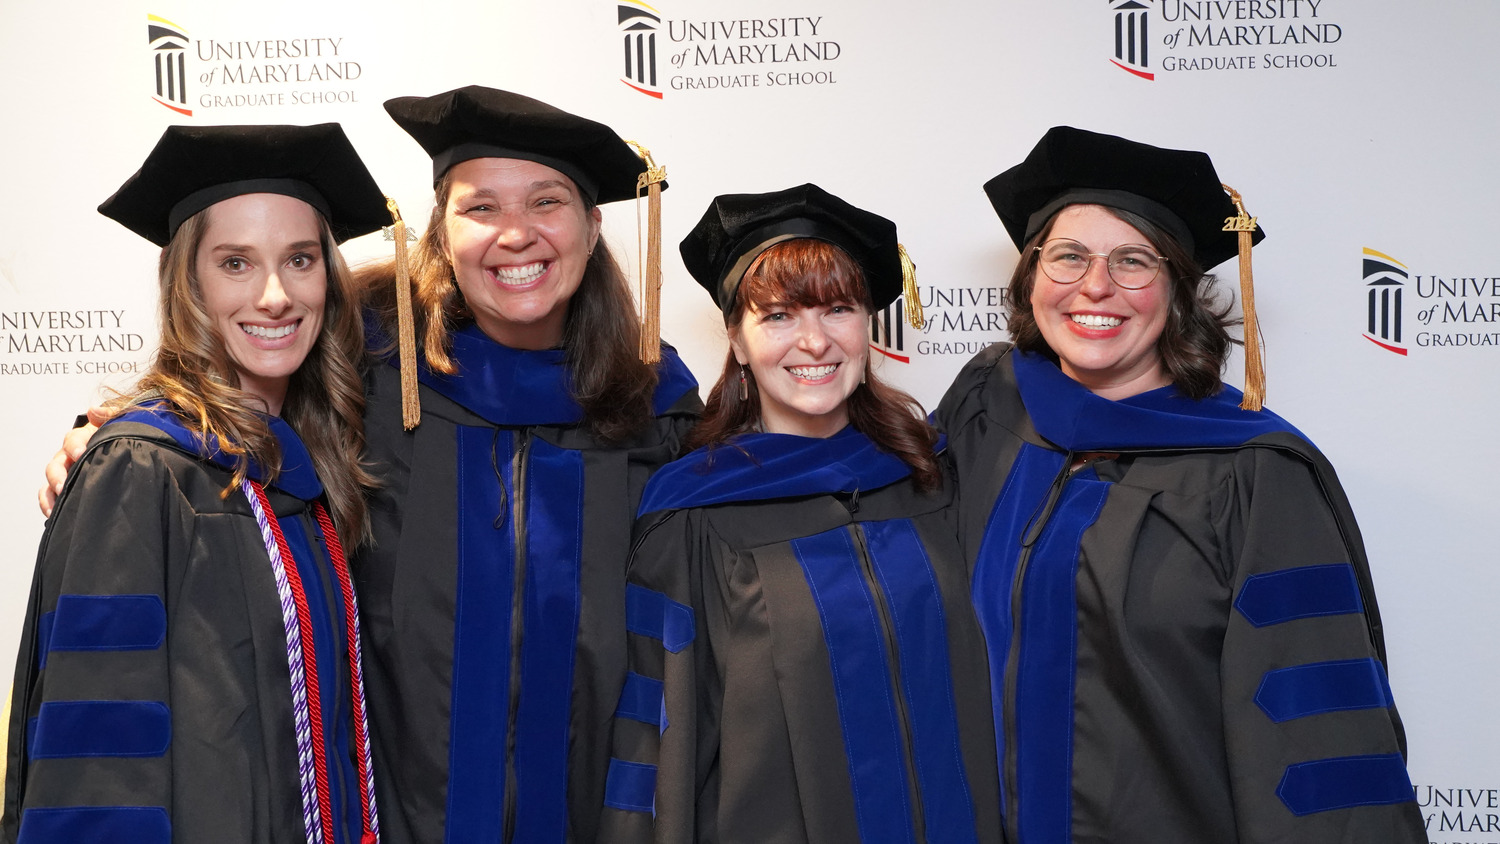 Four women in doctoral regalia